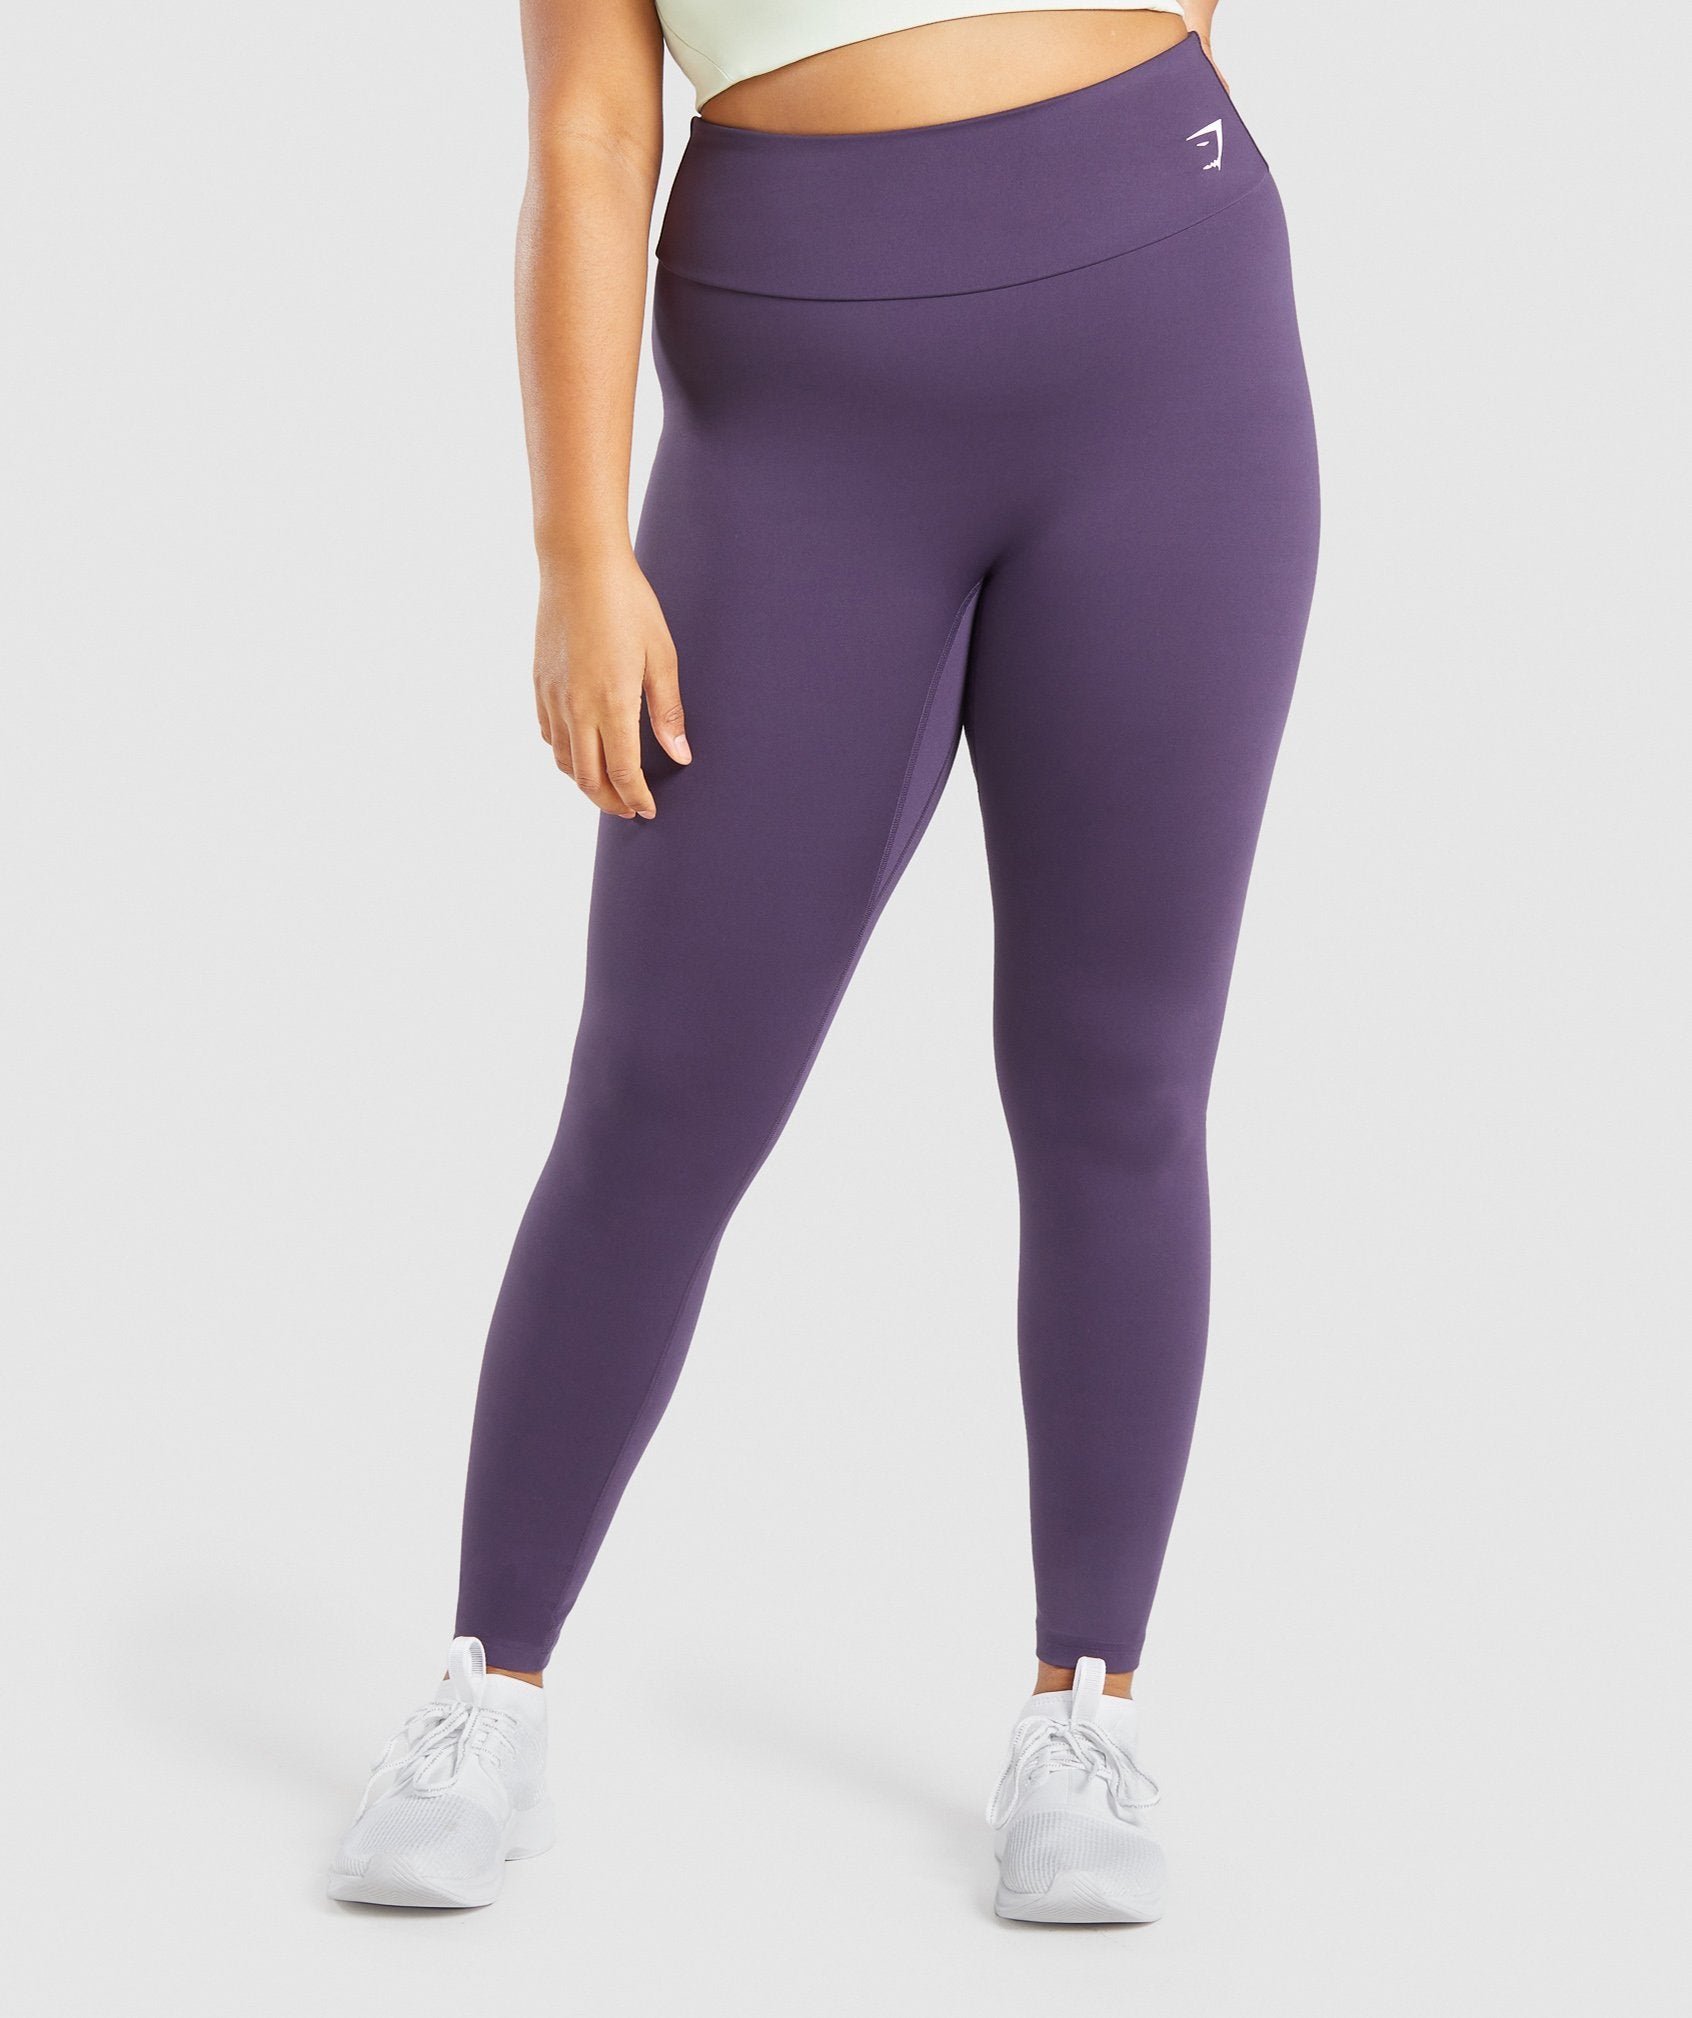 Gymshark Leggings XS Purple Marl - $31 (38% Off Retail) - From Robin